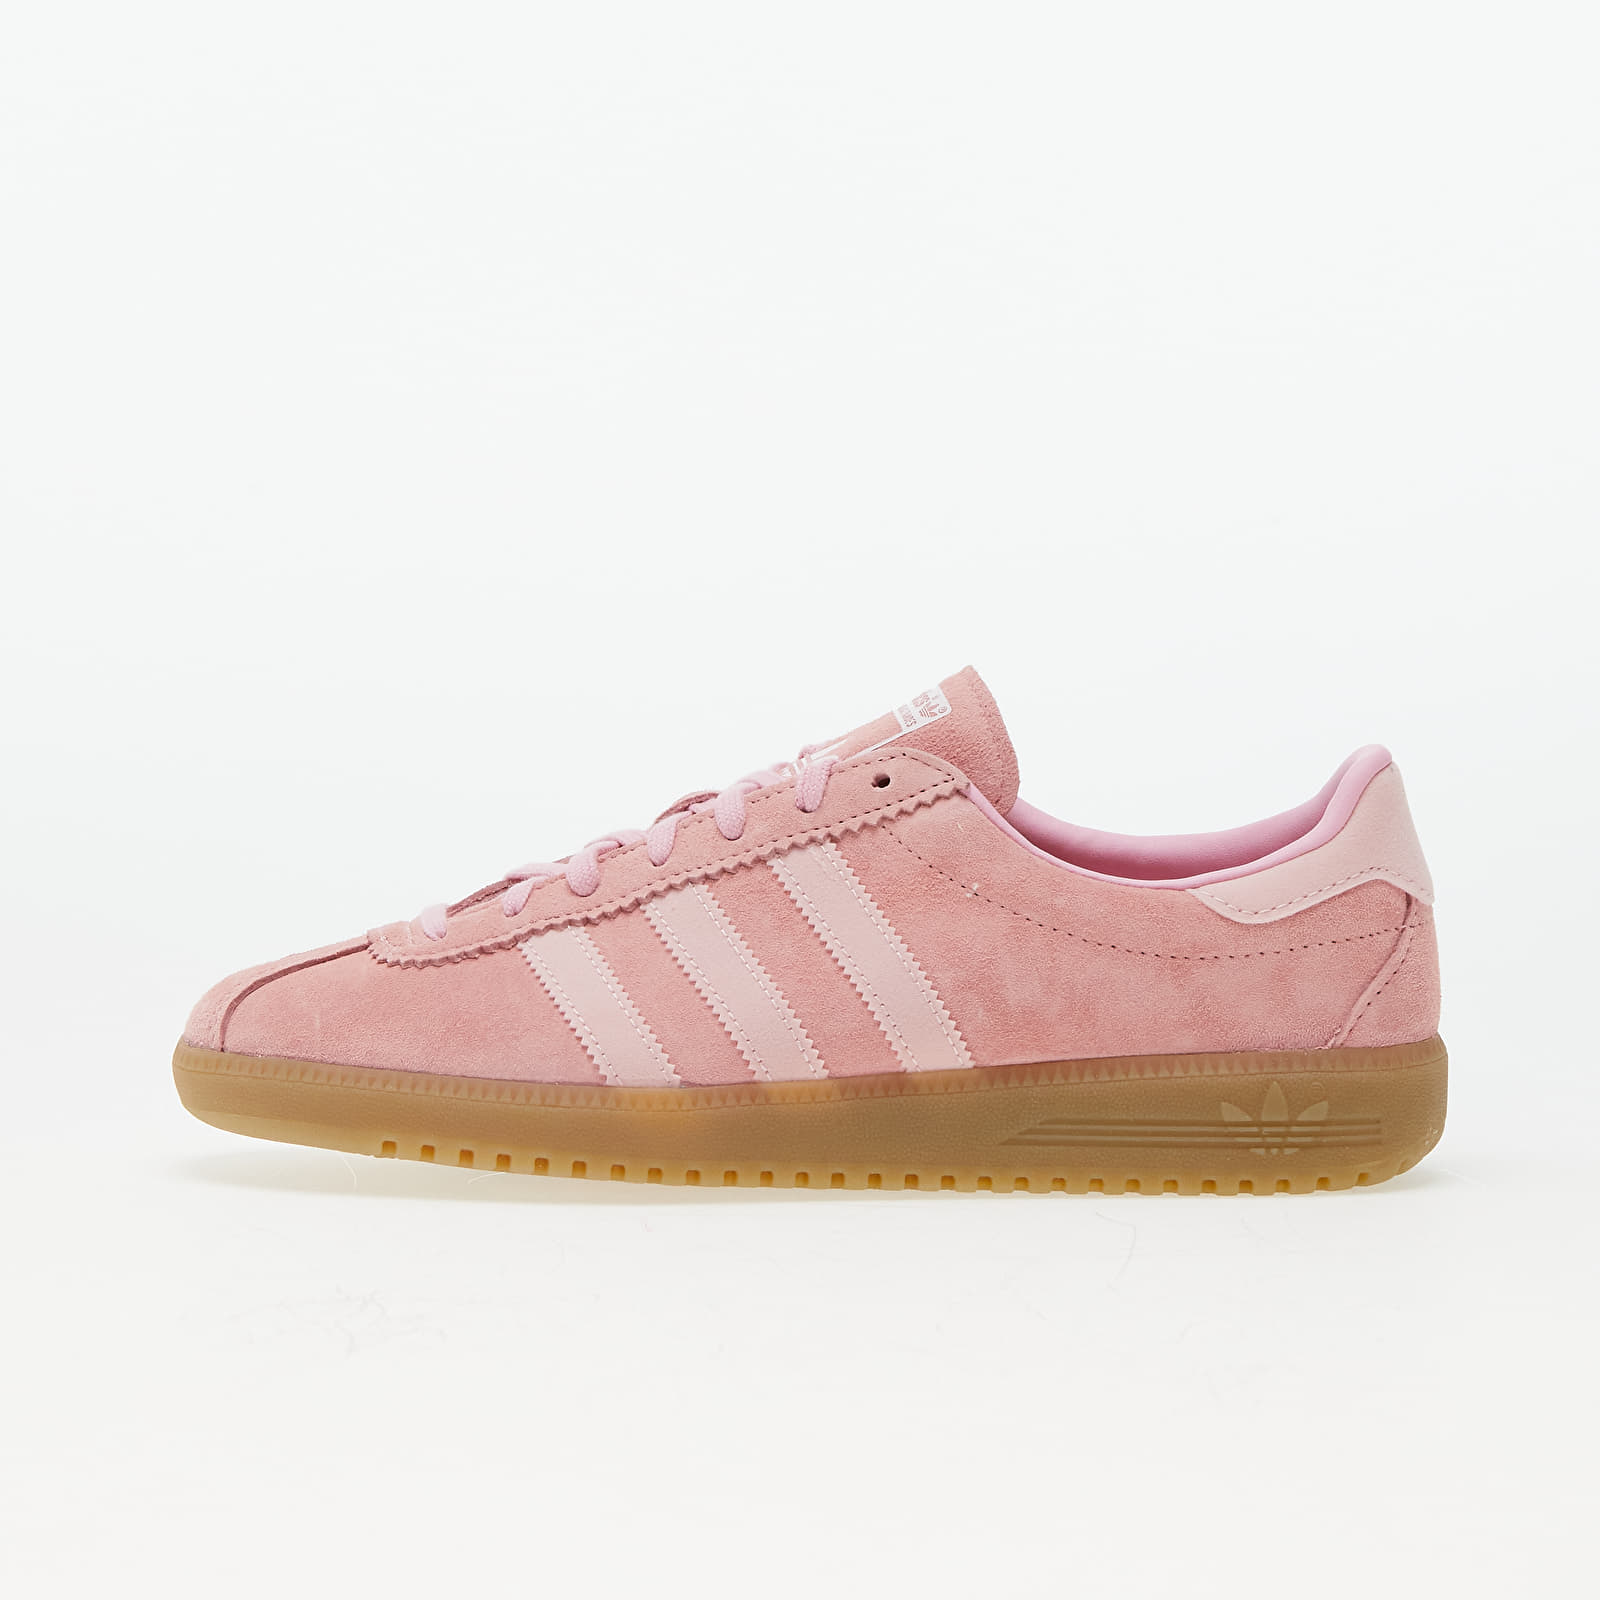 Men's shoes adidas Bermuda Glow Pink/ Clear Pink/ Gum4